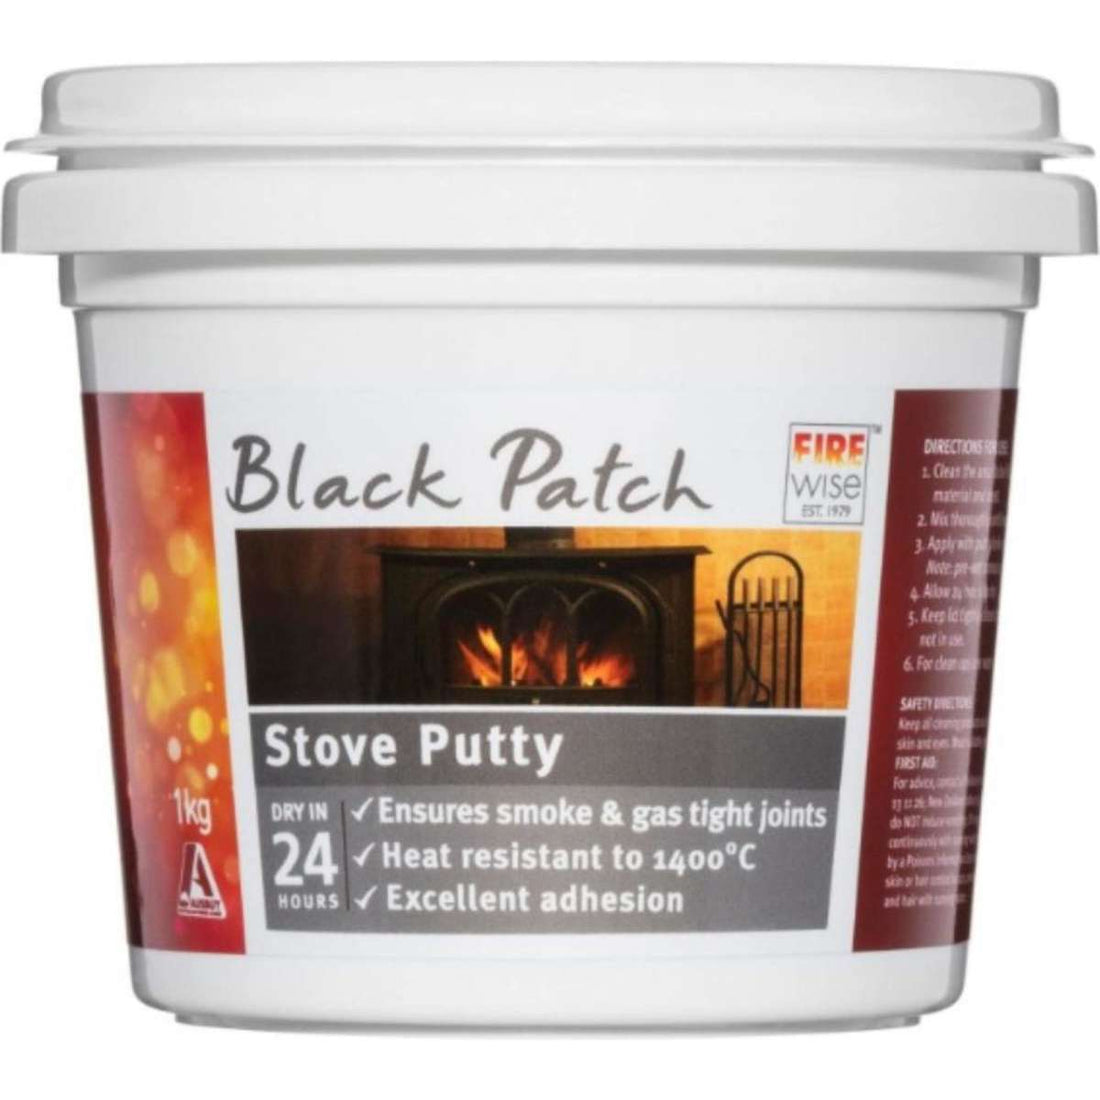 Rubbedin Firewise® Black Patch Stove Putty 1kg